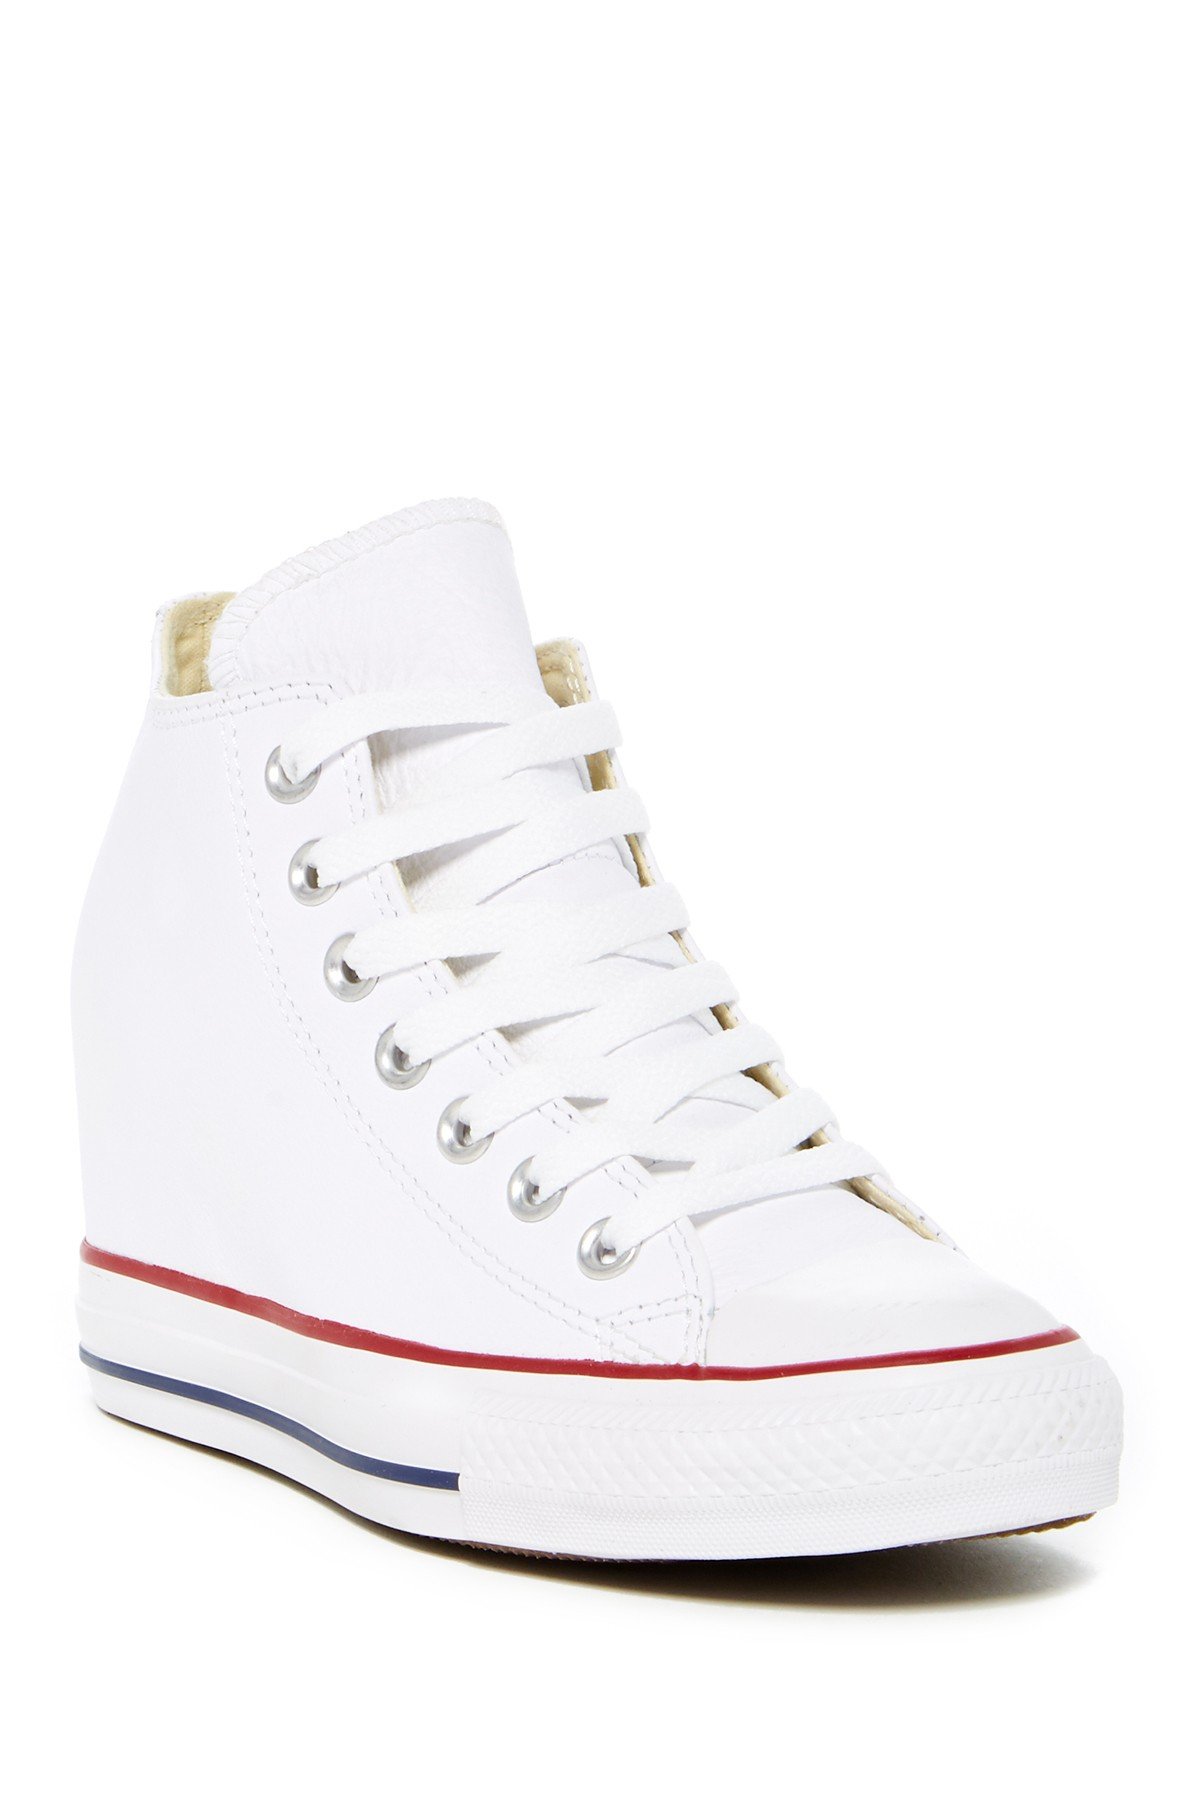 Converse Wedge Shoes White | estudioespositoymiguel.com.ar